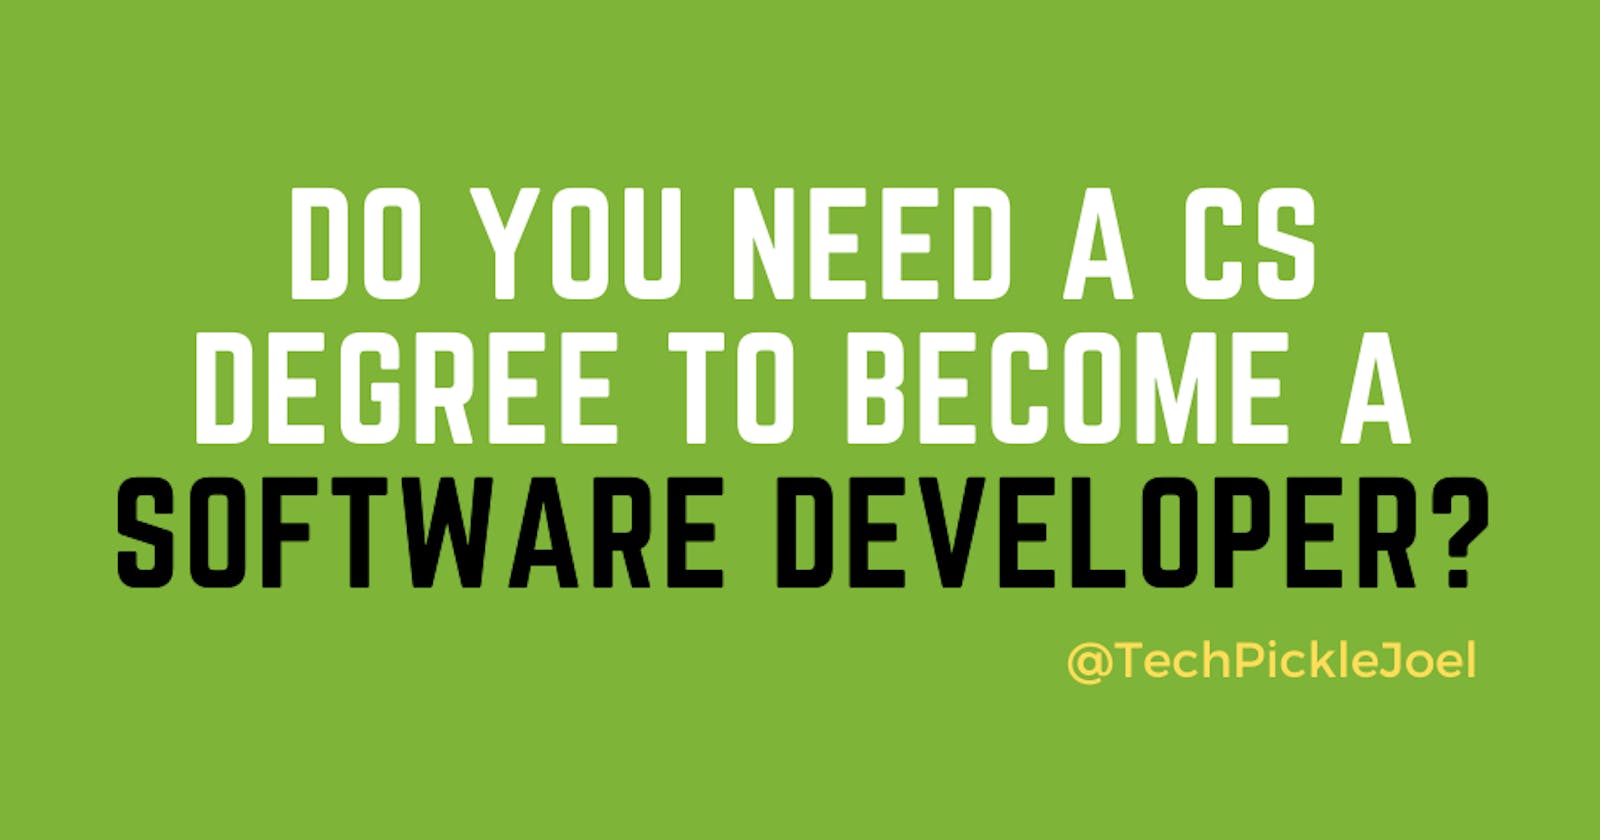 Do you need a CS degree to become a software developer?